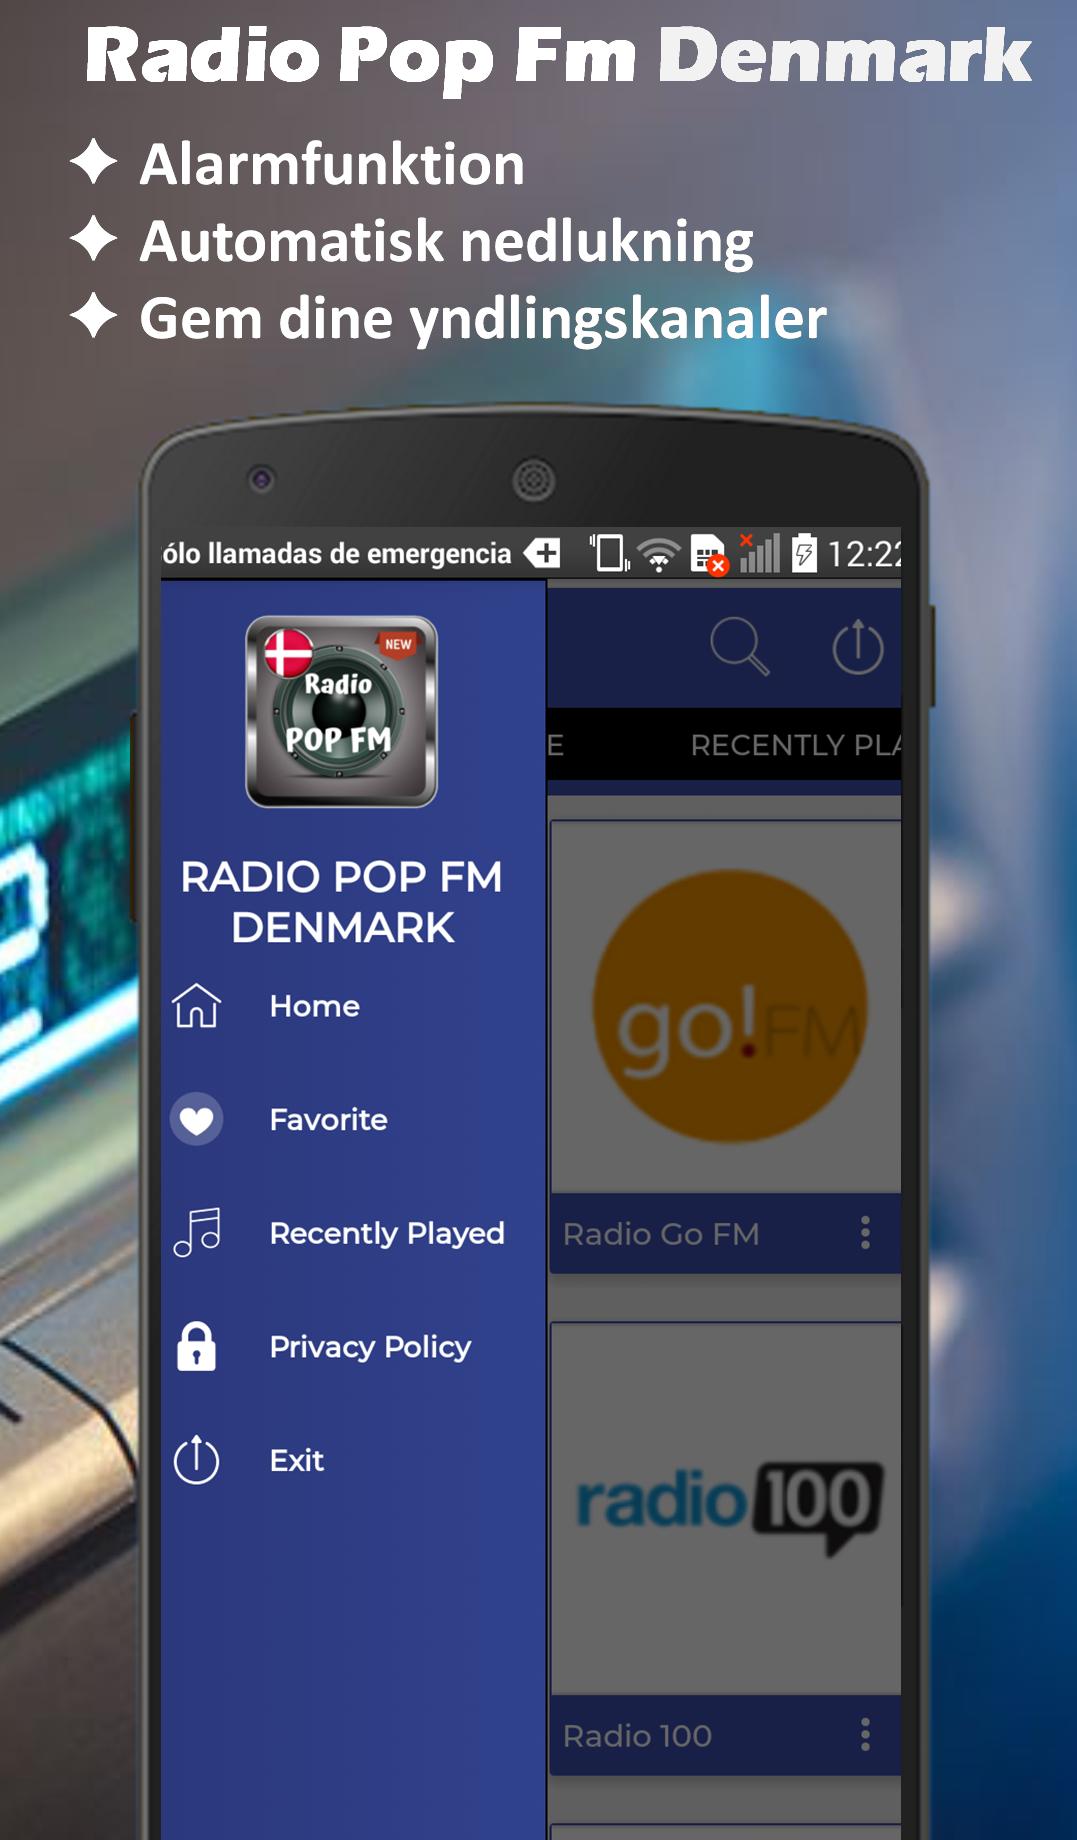 Radio Pop Fm Online Radio Danmark for Android - APK Download